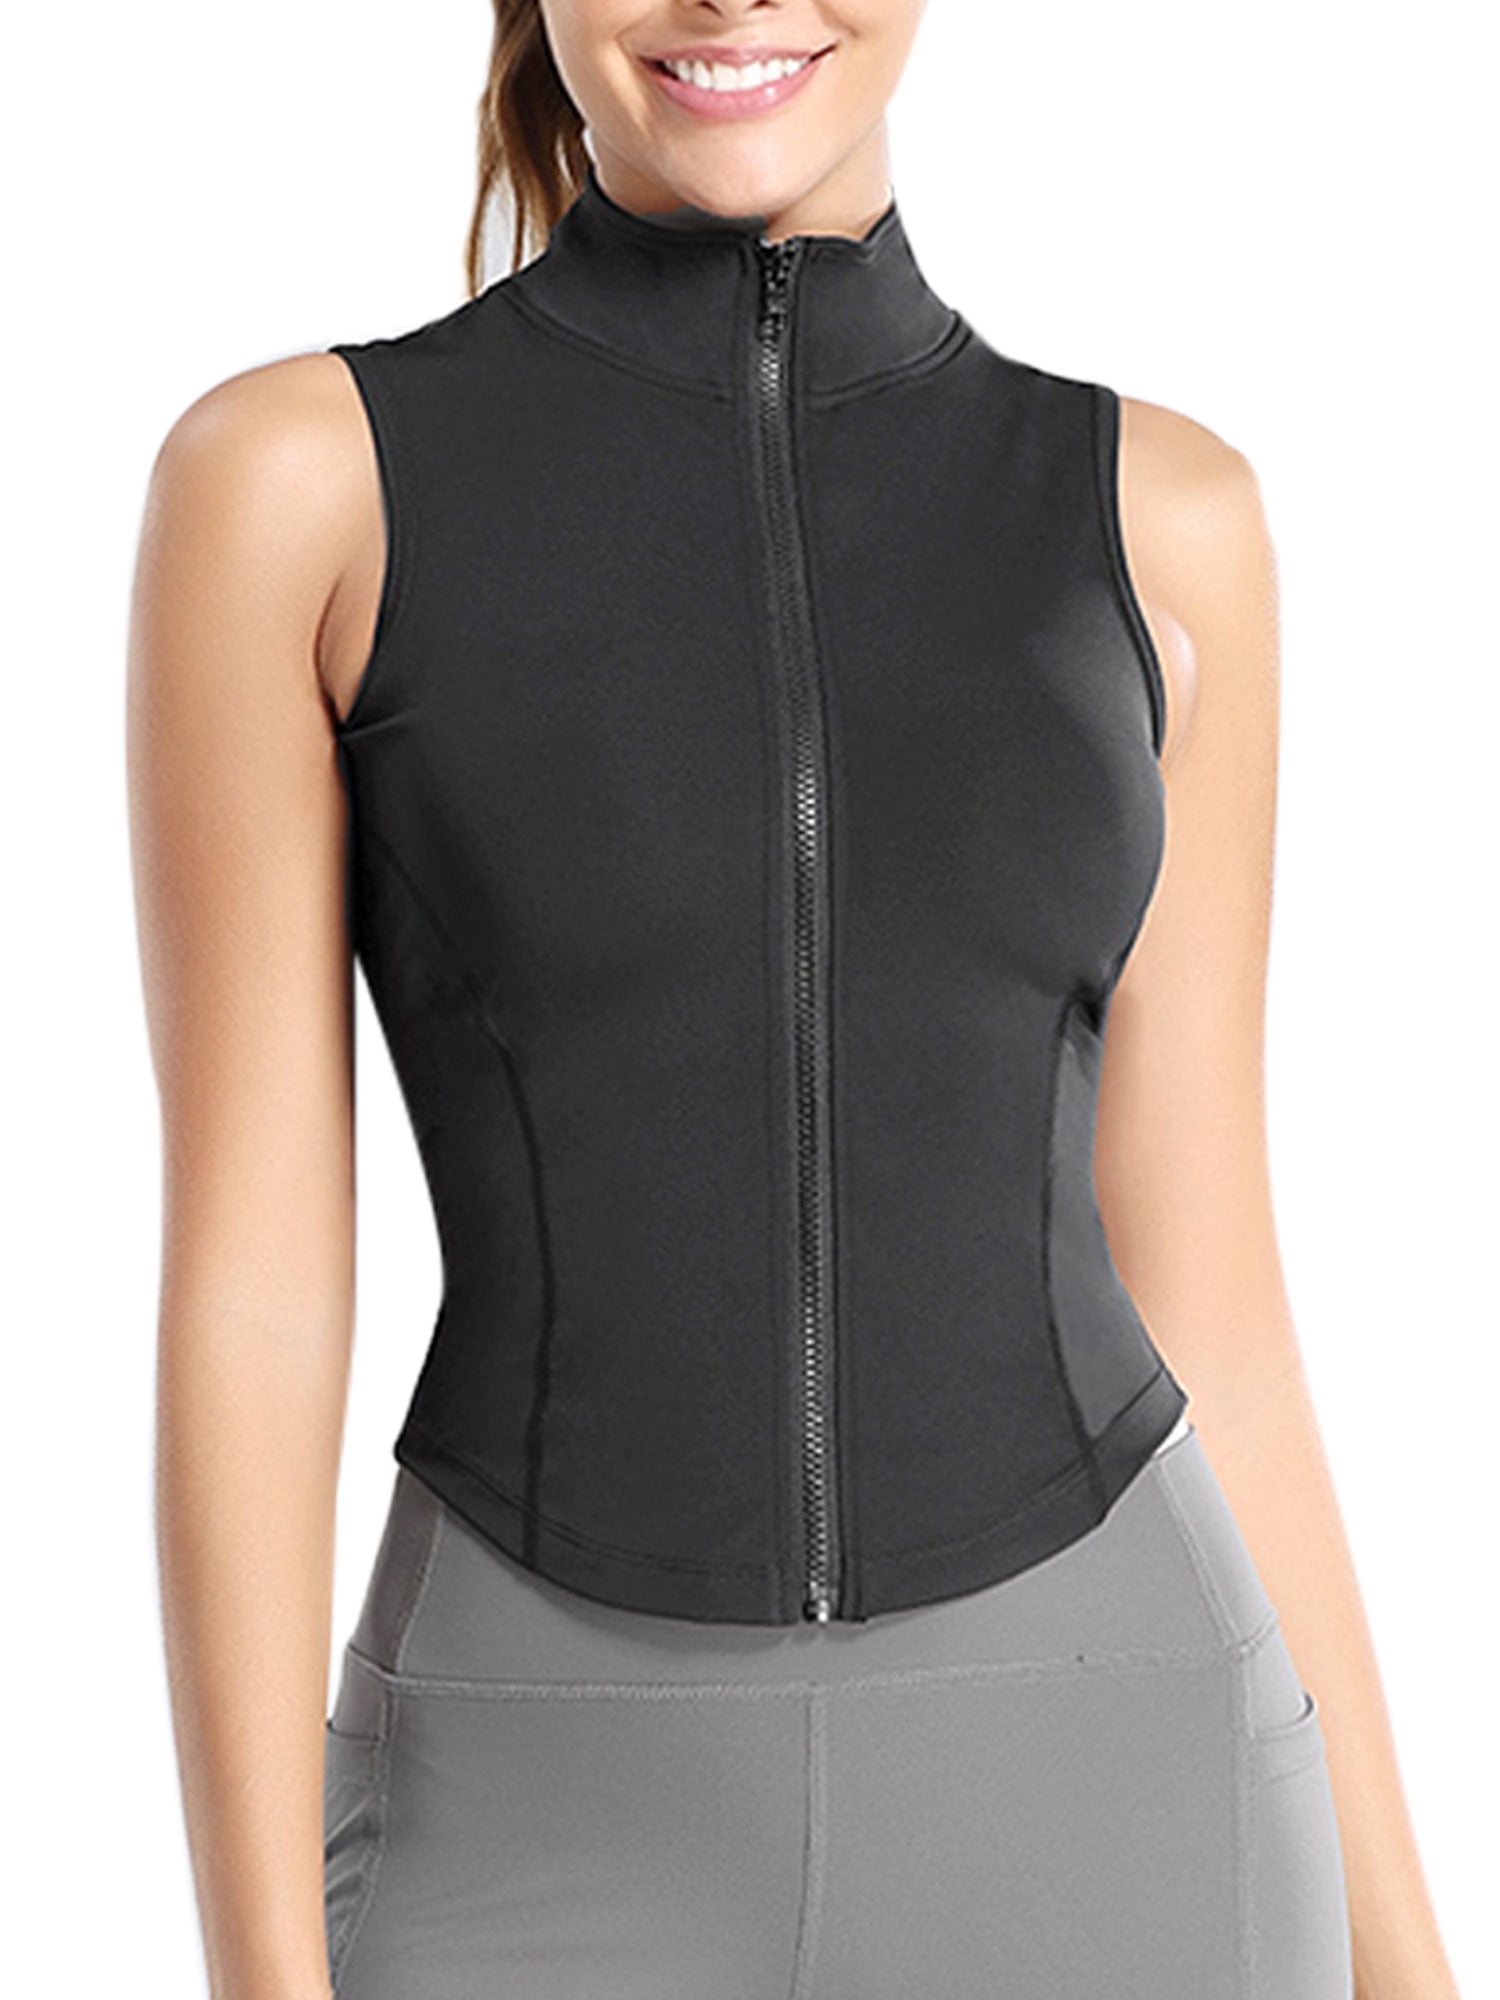 Xishiloft Womens Lightweight Full Zip Sleeveless Running Vest Slim Fit Workout Sportwear Gym Vests 